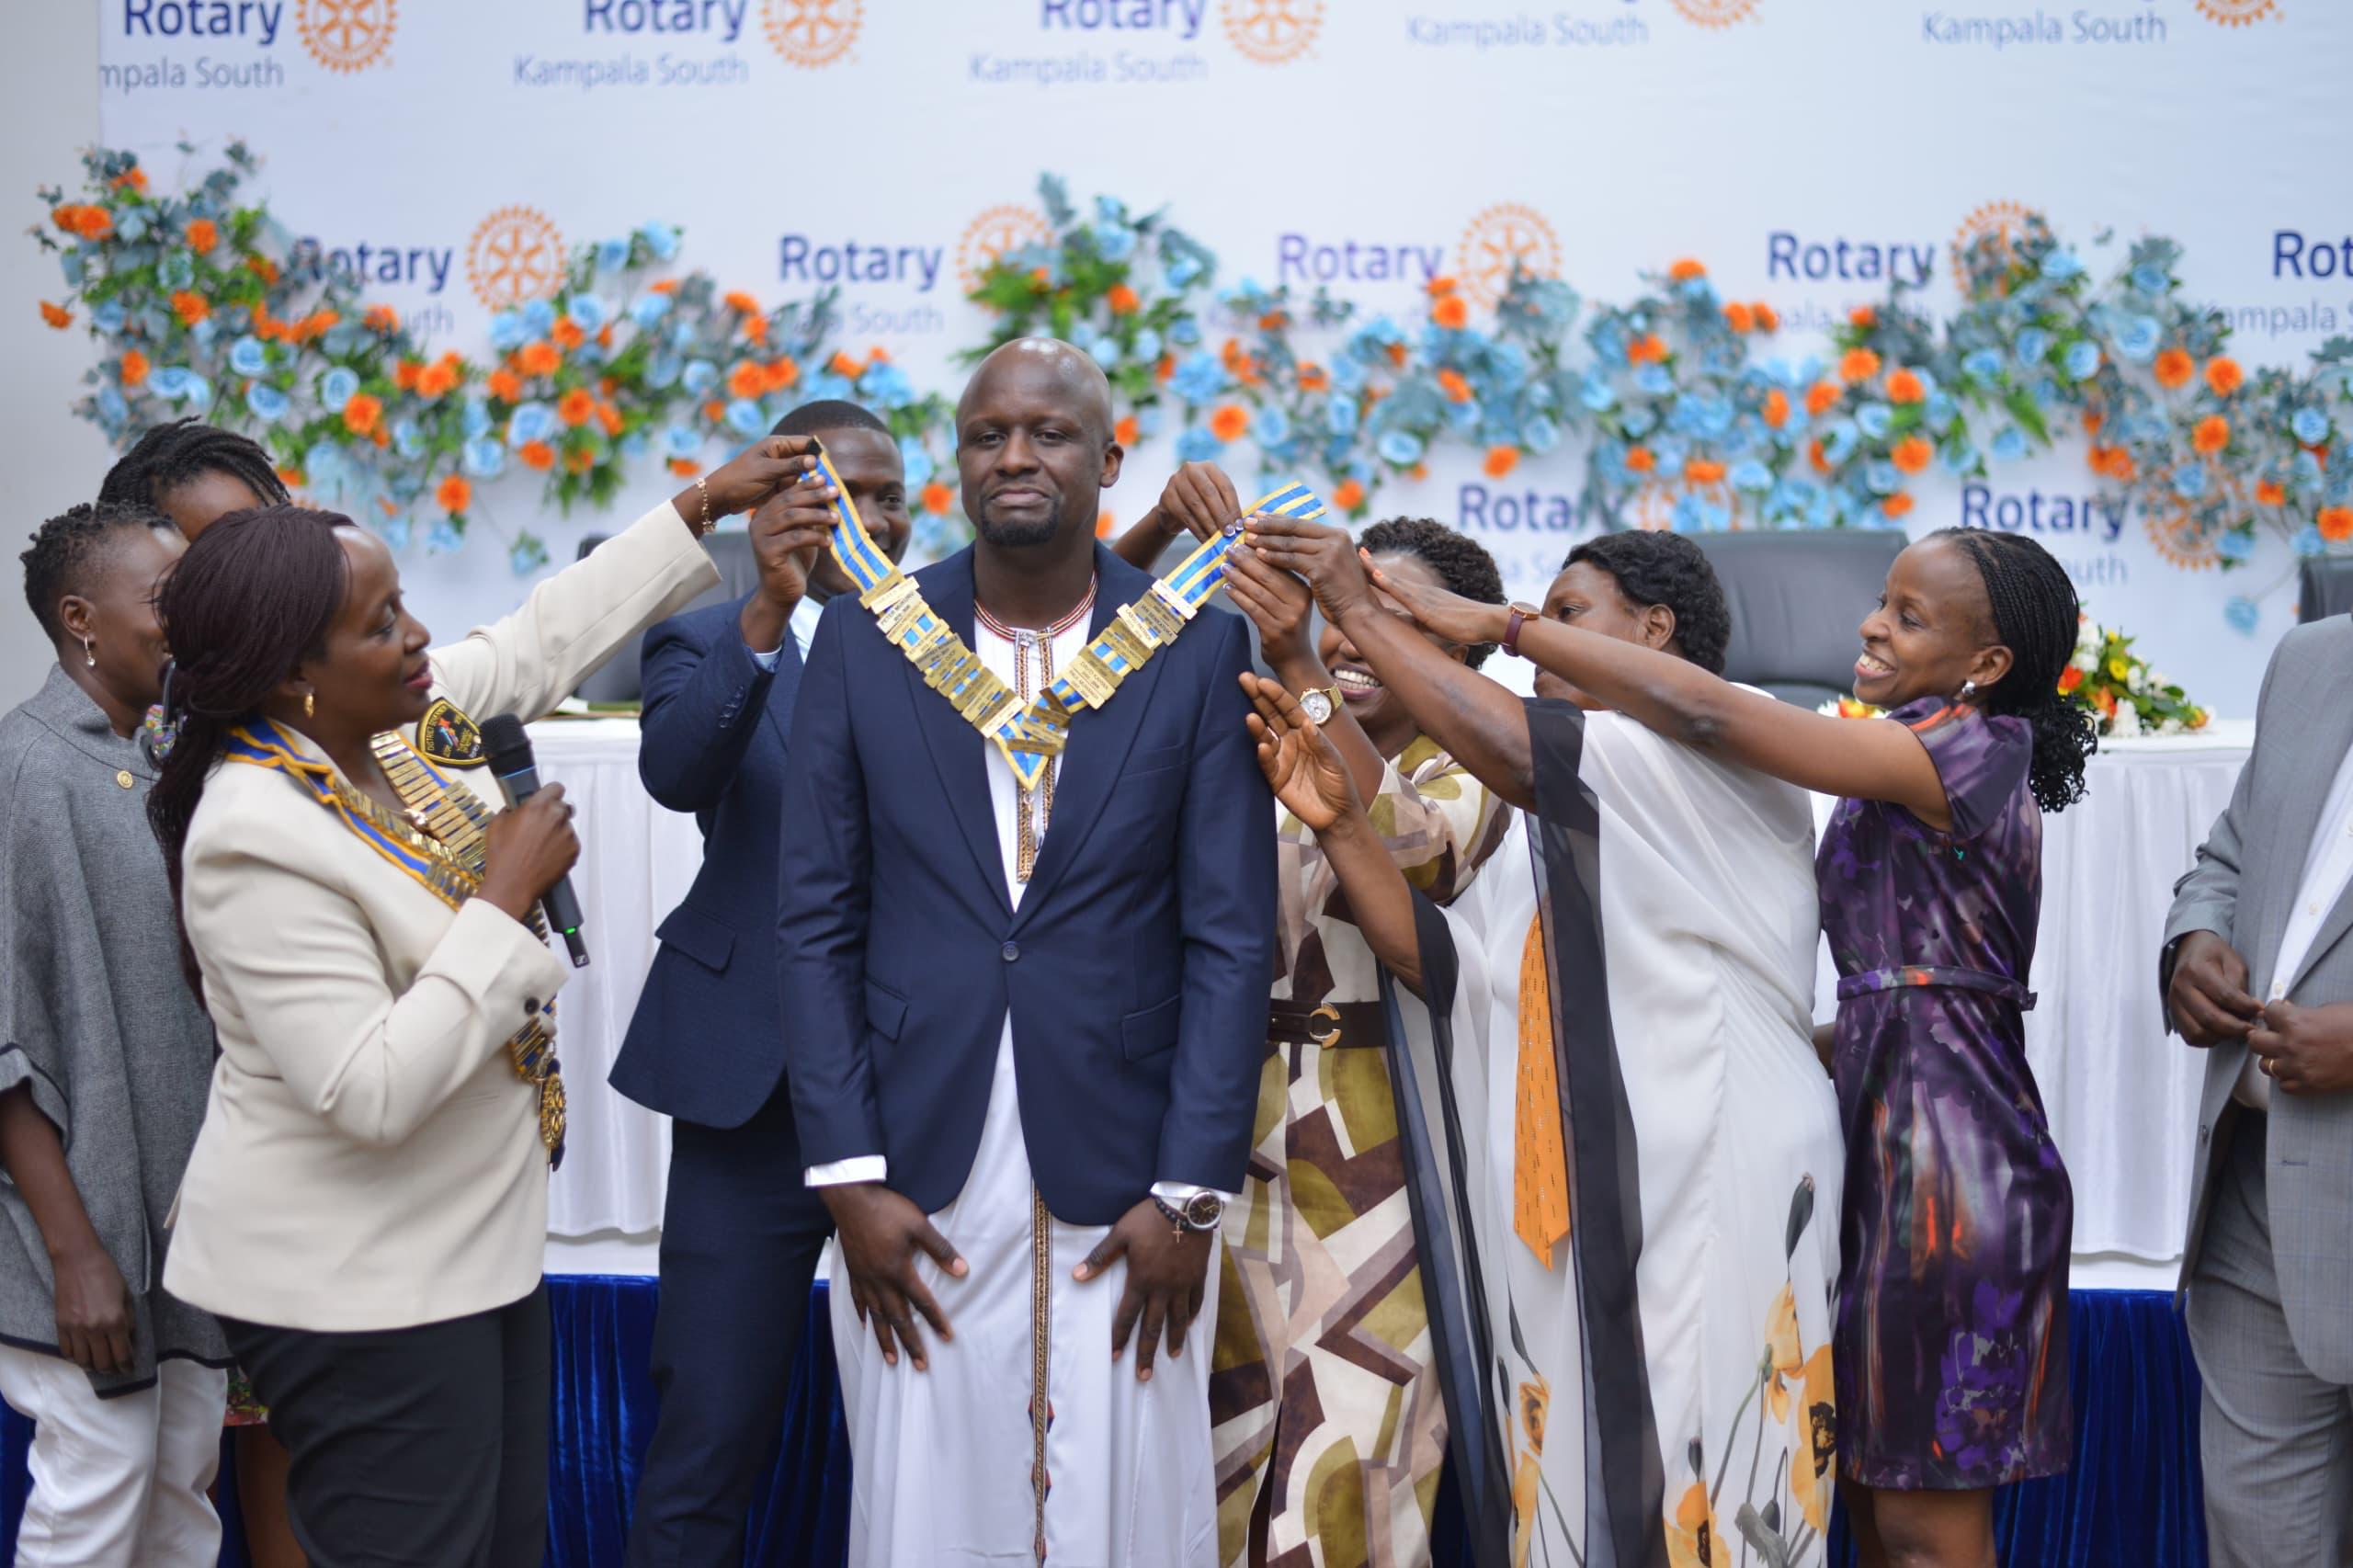 Rotary Club of Kampala South installs new president